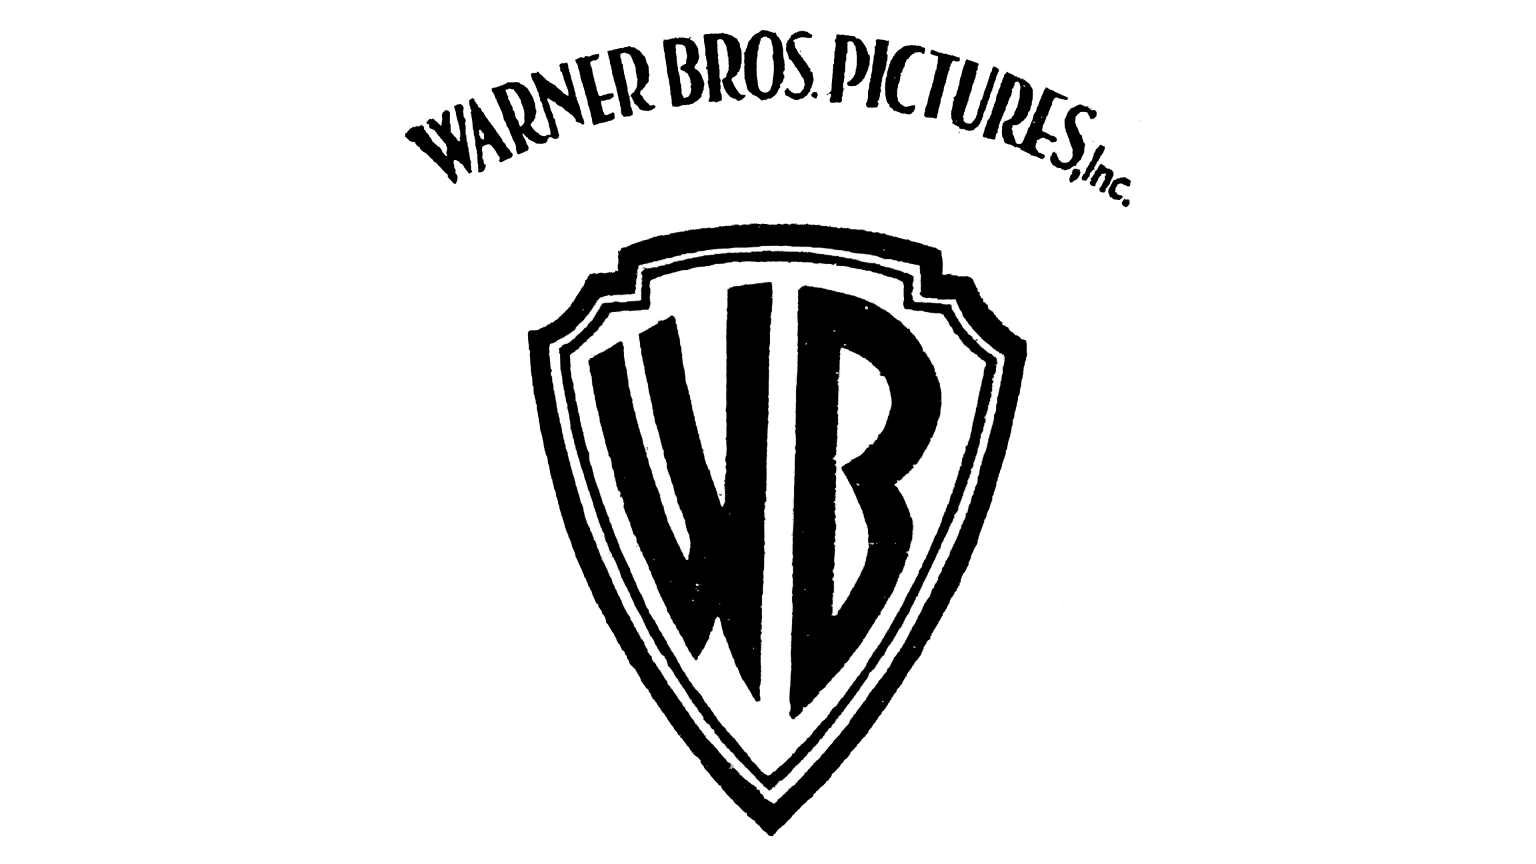 Warner brothers 1927. Warner brothers 1923. Warner Bros логотип. Логотип ворнер бразерс. Варнер фф